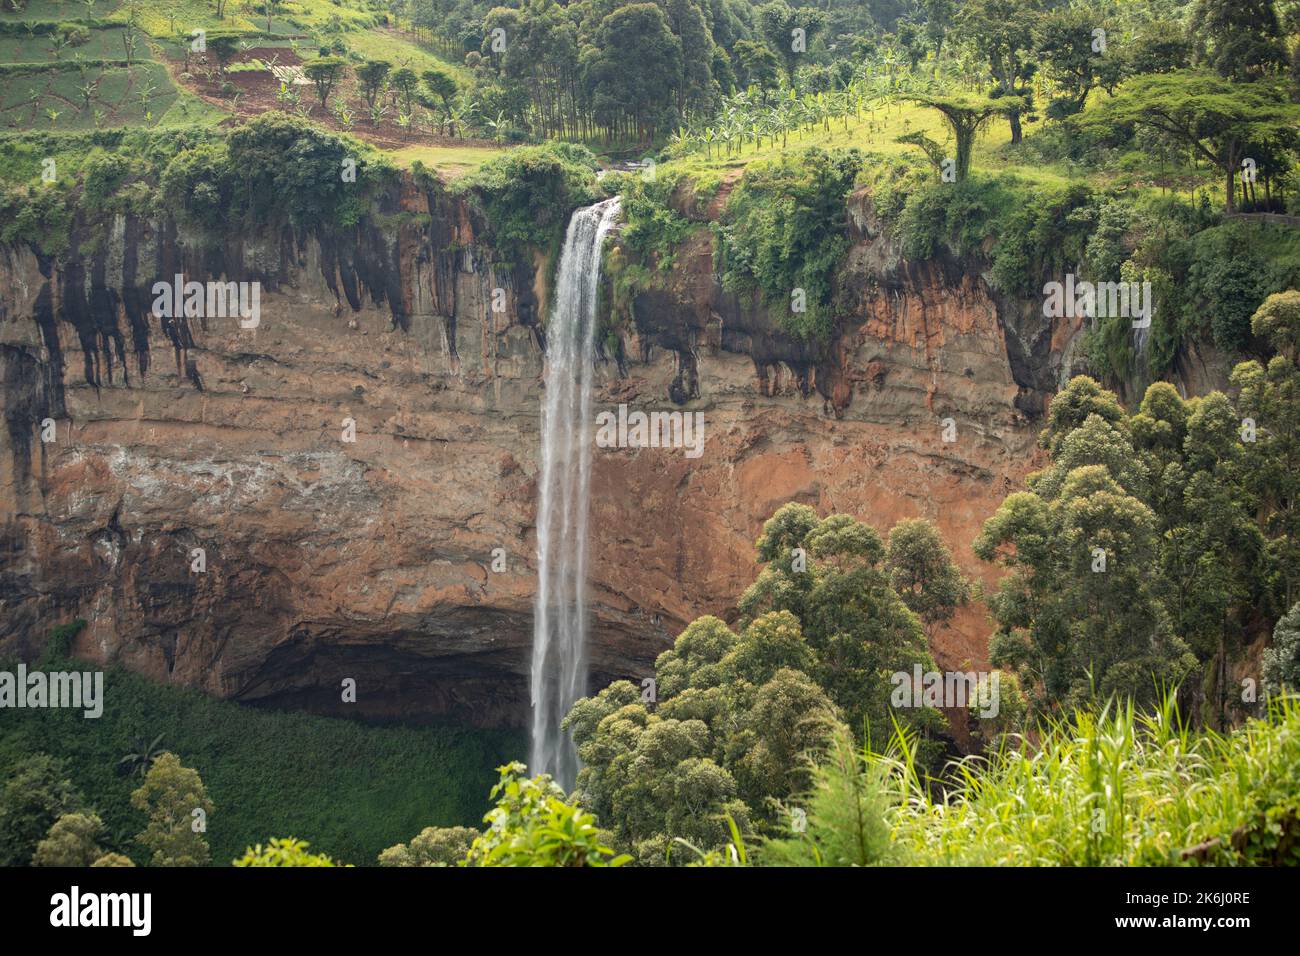 Rural landscape in uganda africa hi-res stock photography and images ...